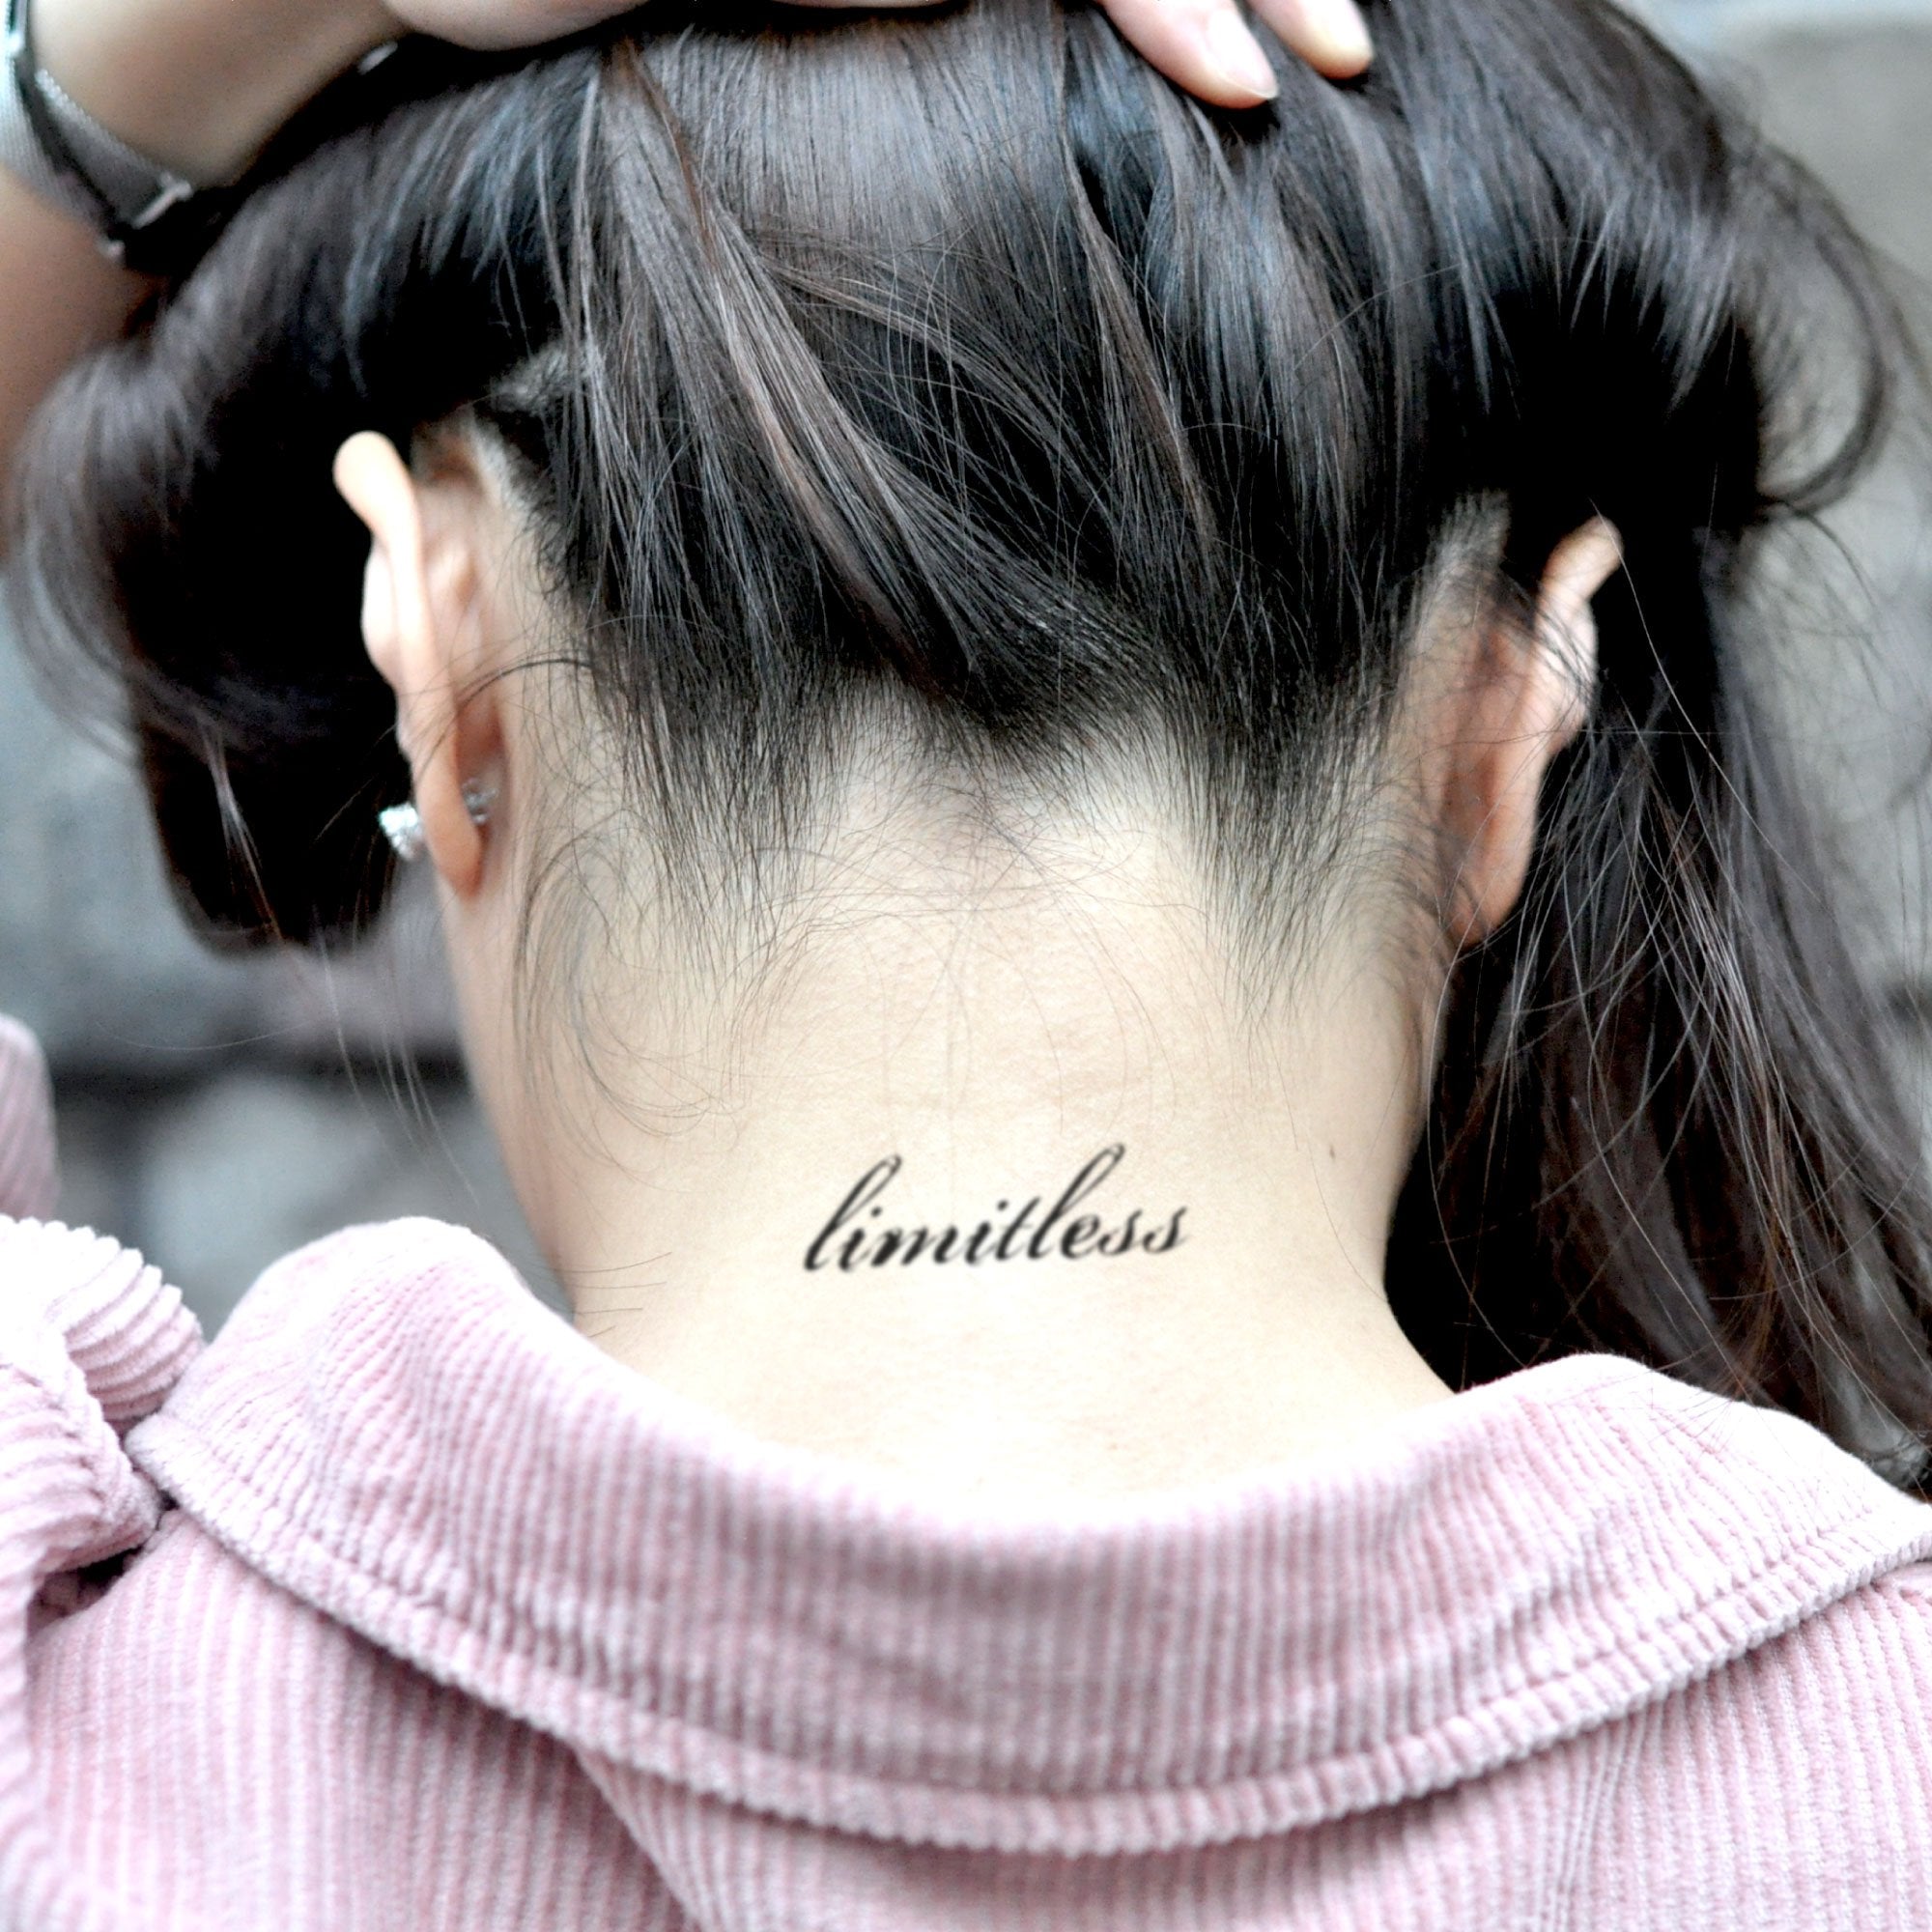 Limitless tattoo  original design by Michelle Pendergrass   Flickr